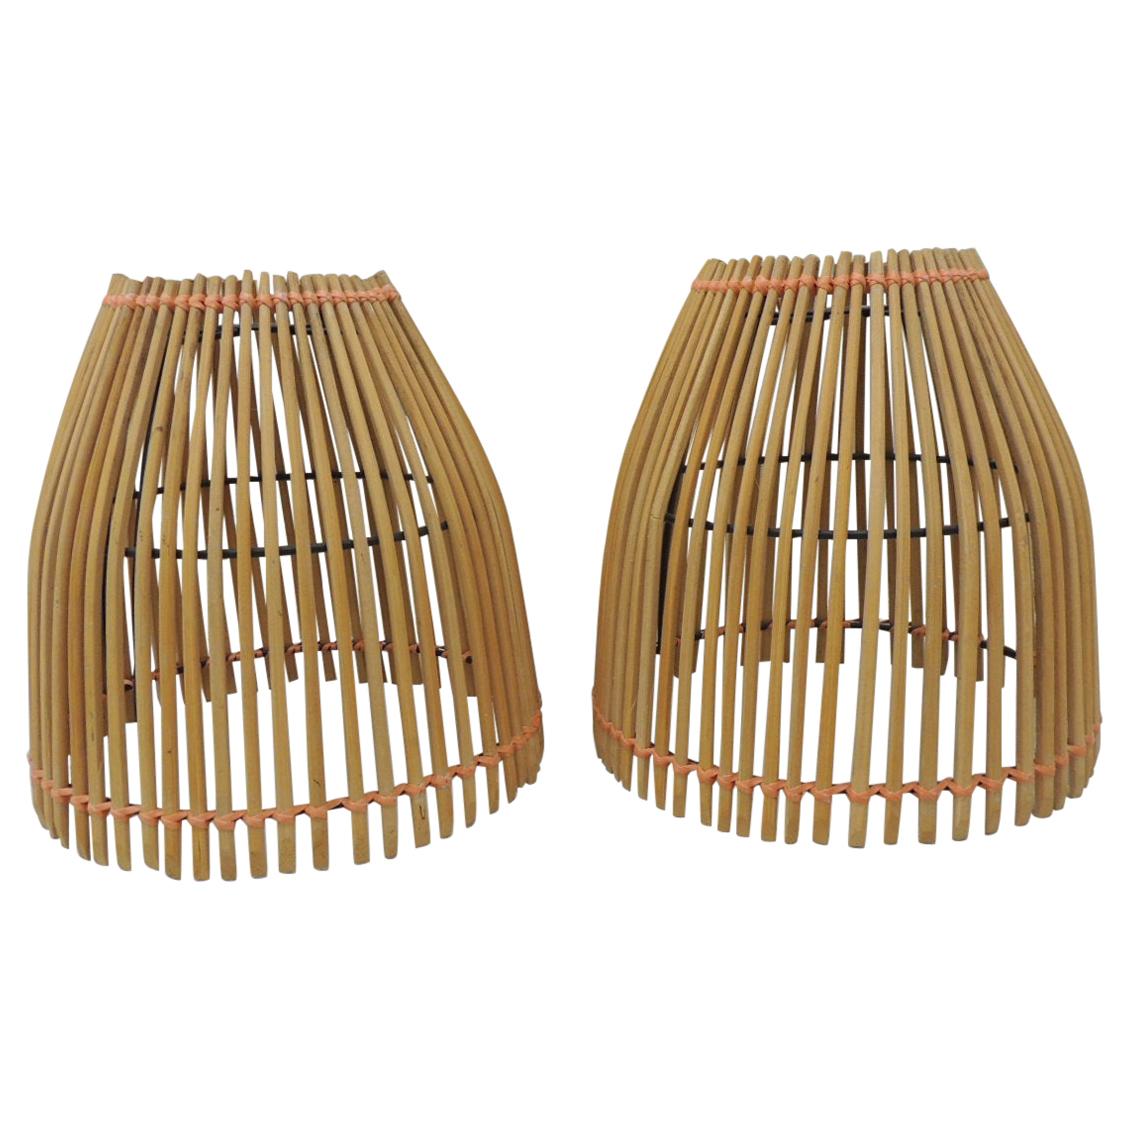 Pair of Bamboo Matchsticks Lampshades